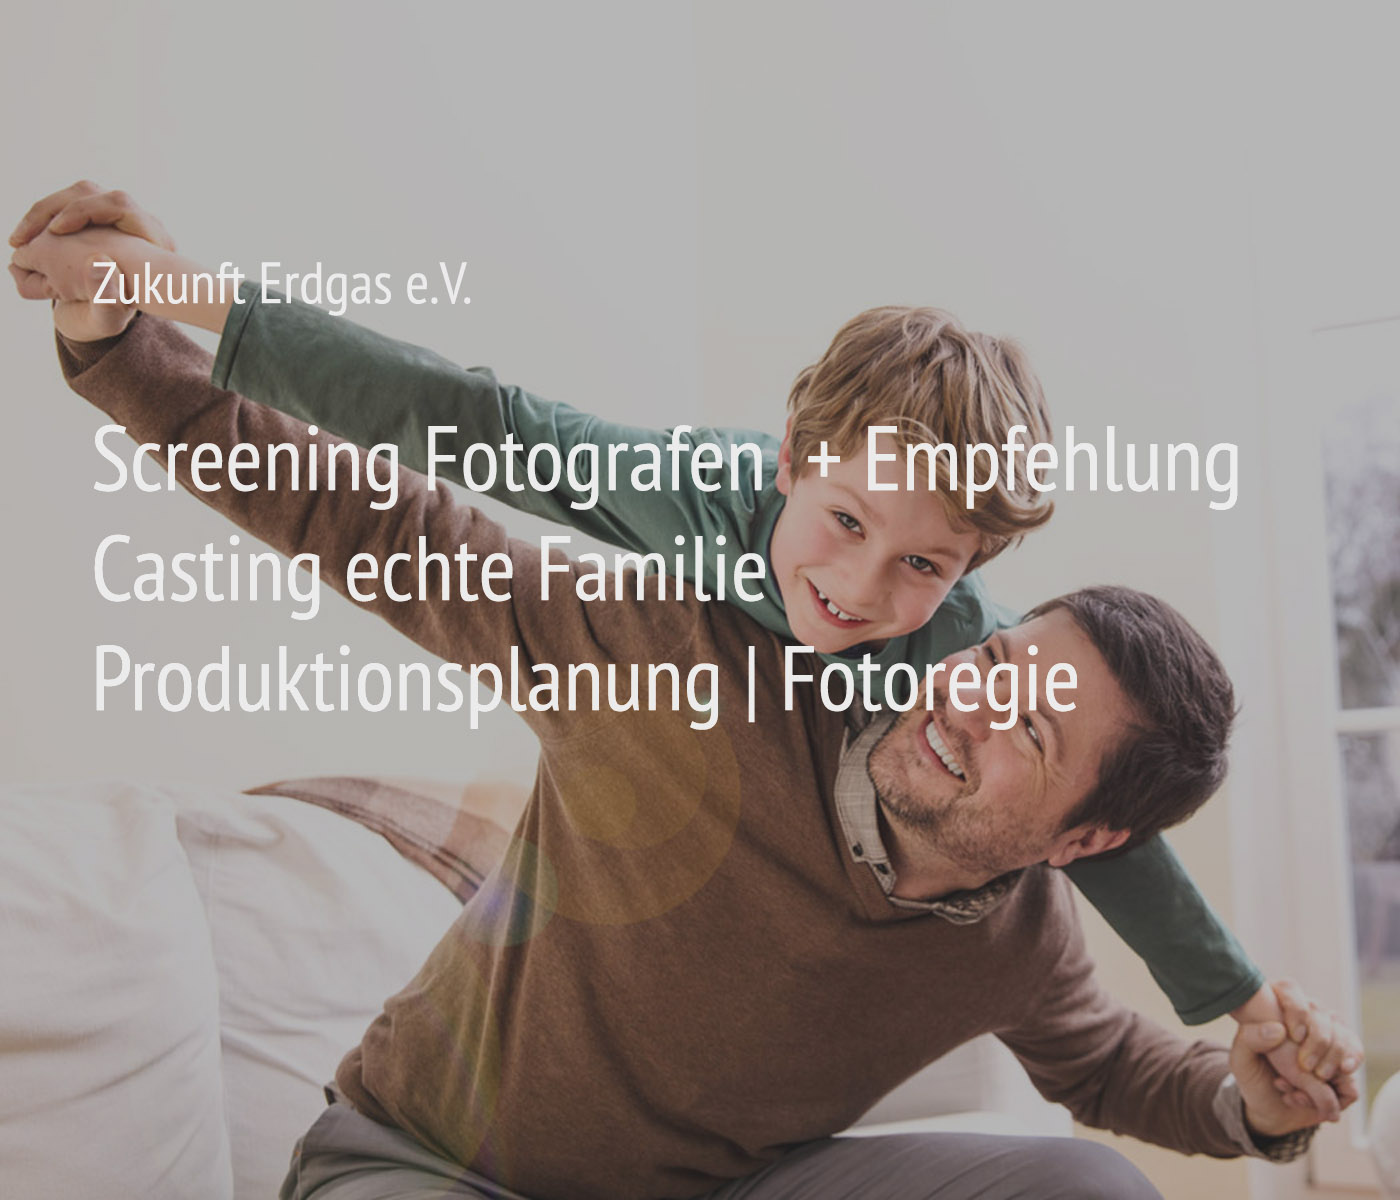 EXPOSE Conny Oelker Projektmanagement & Organisation von Fotoshootings & Videoproduktionen - Projekt Zukunft Erdgas e.V.